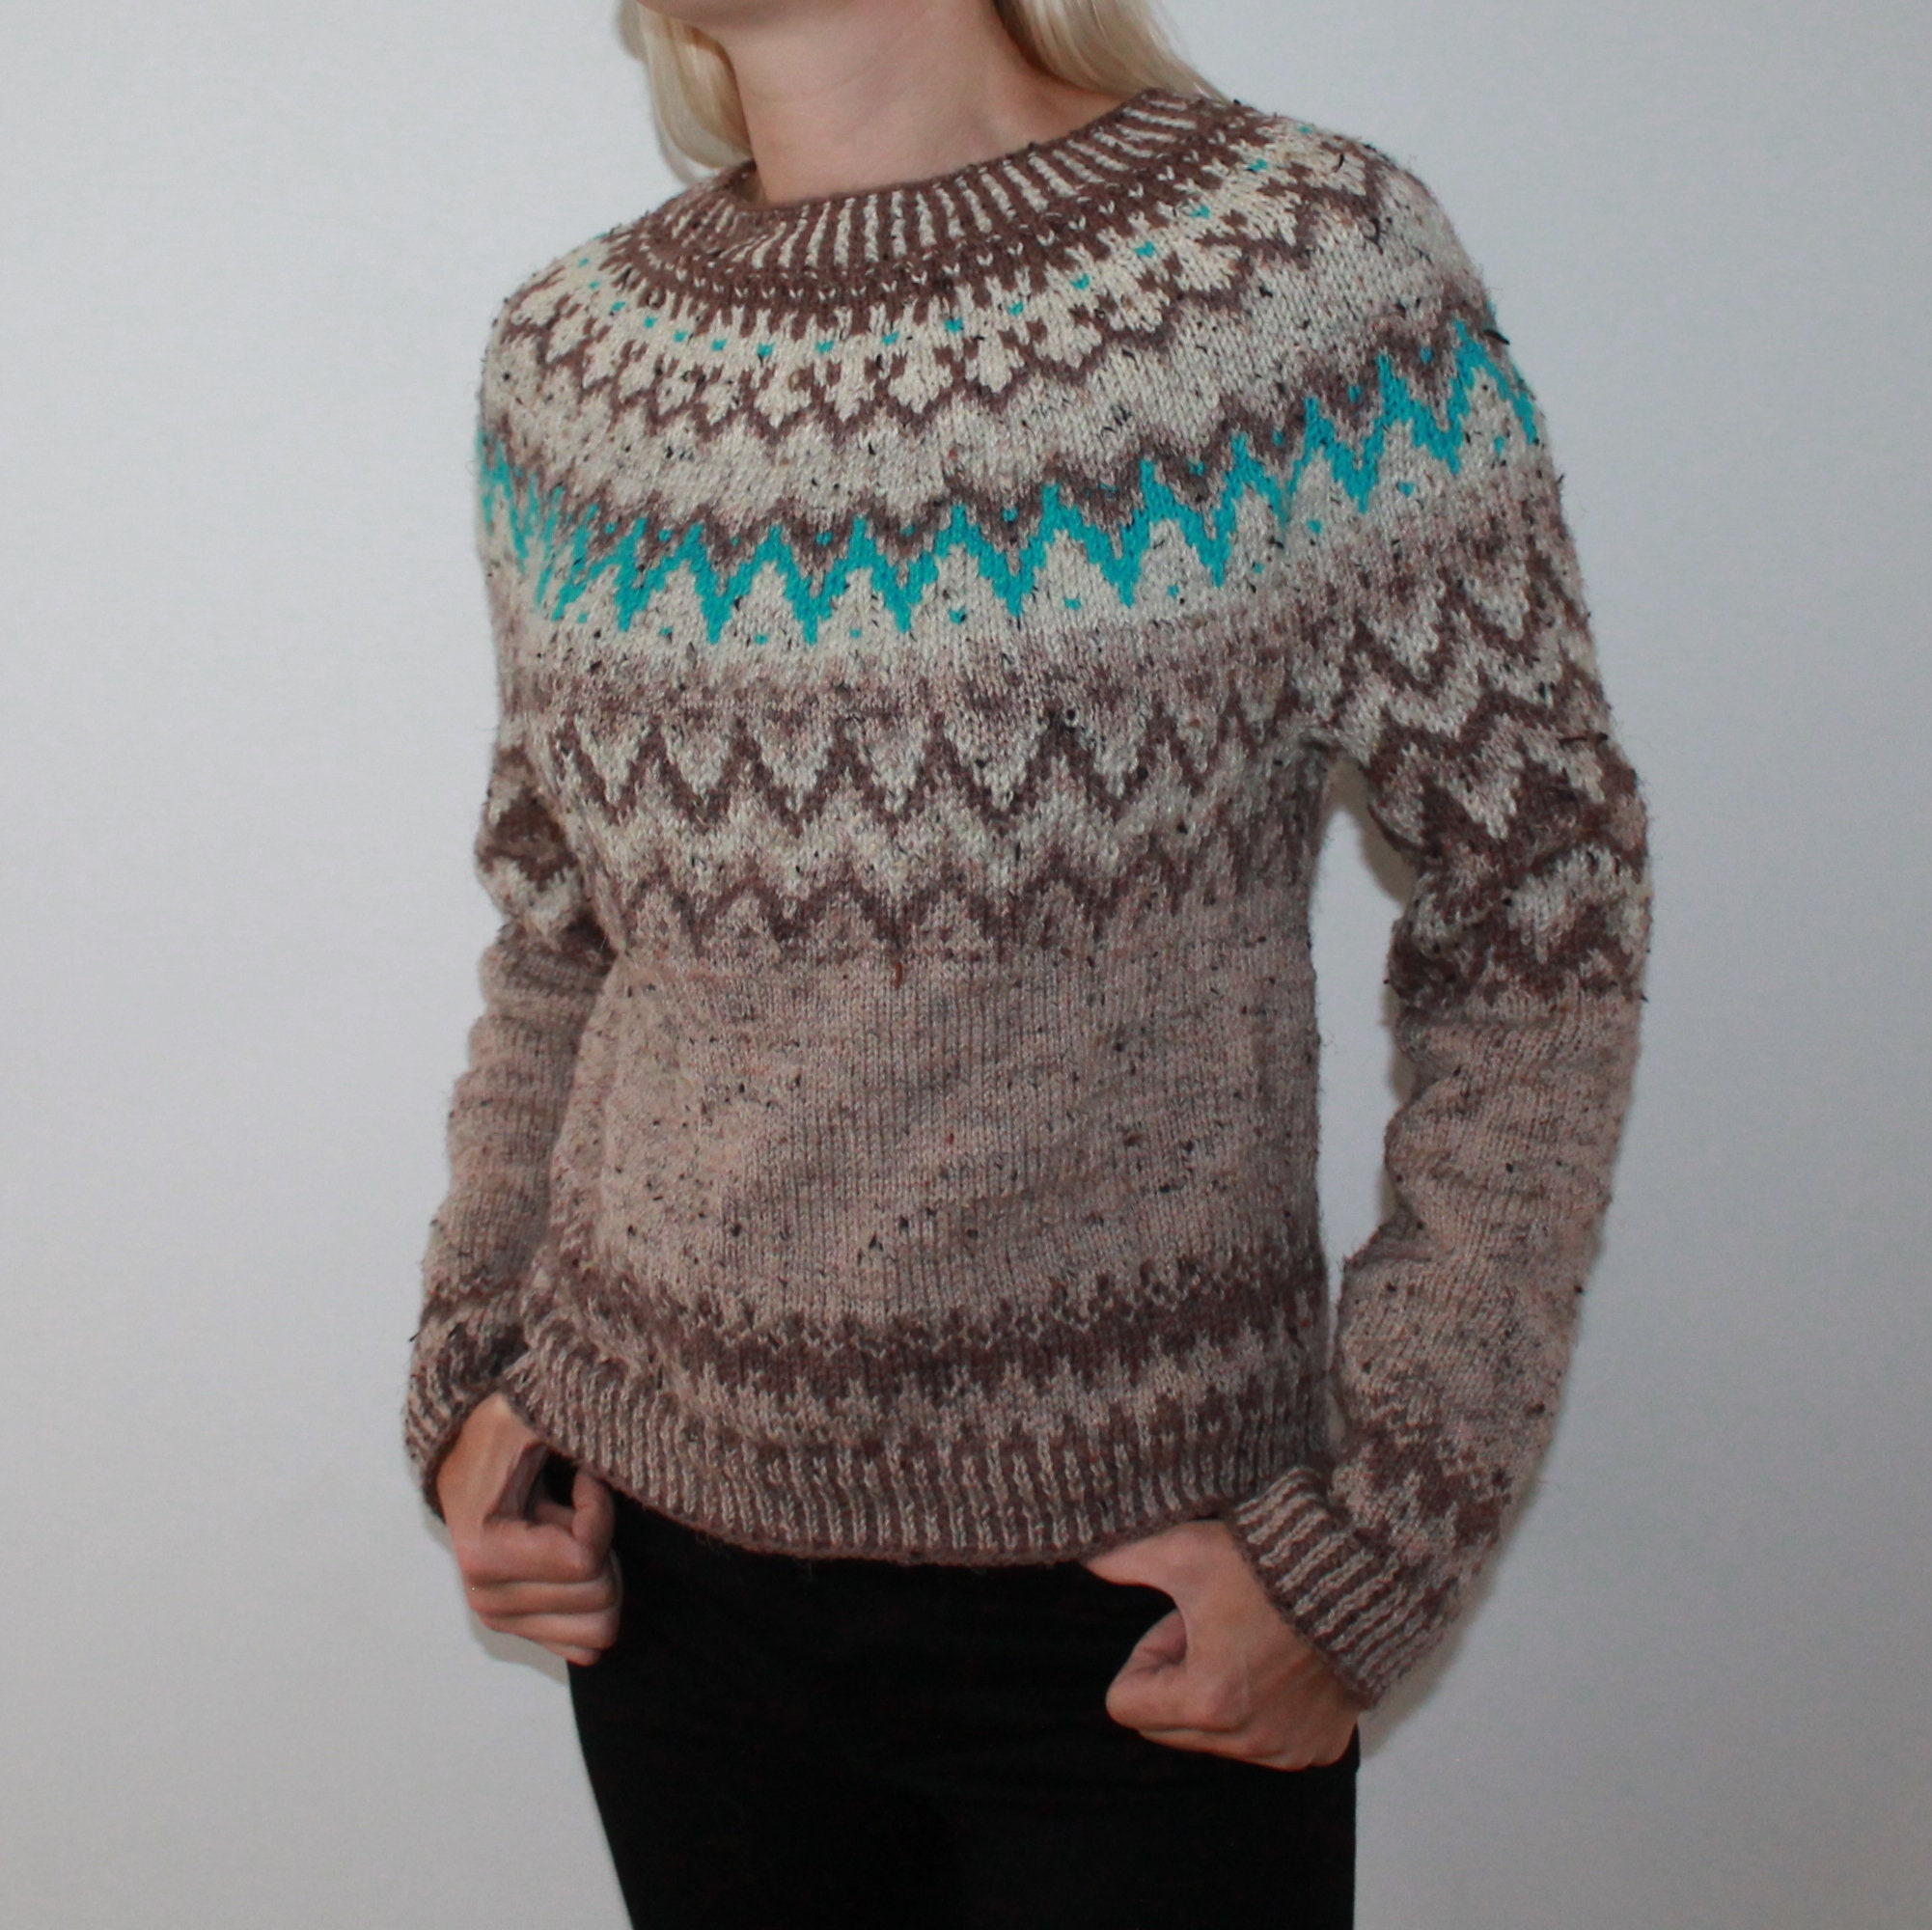 Norwegian sweater Fair Isle sweater Hand knit sweater | Etsy